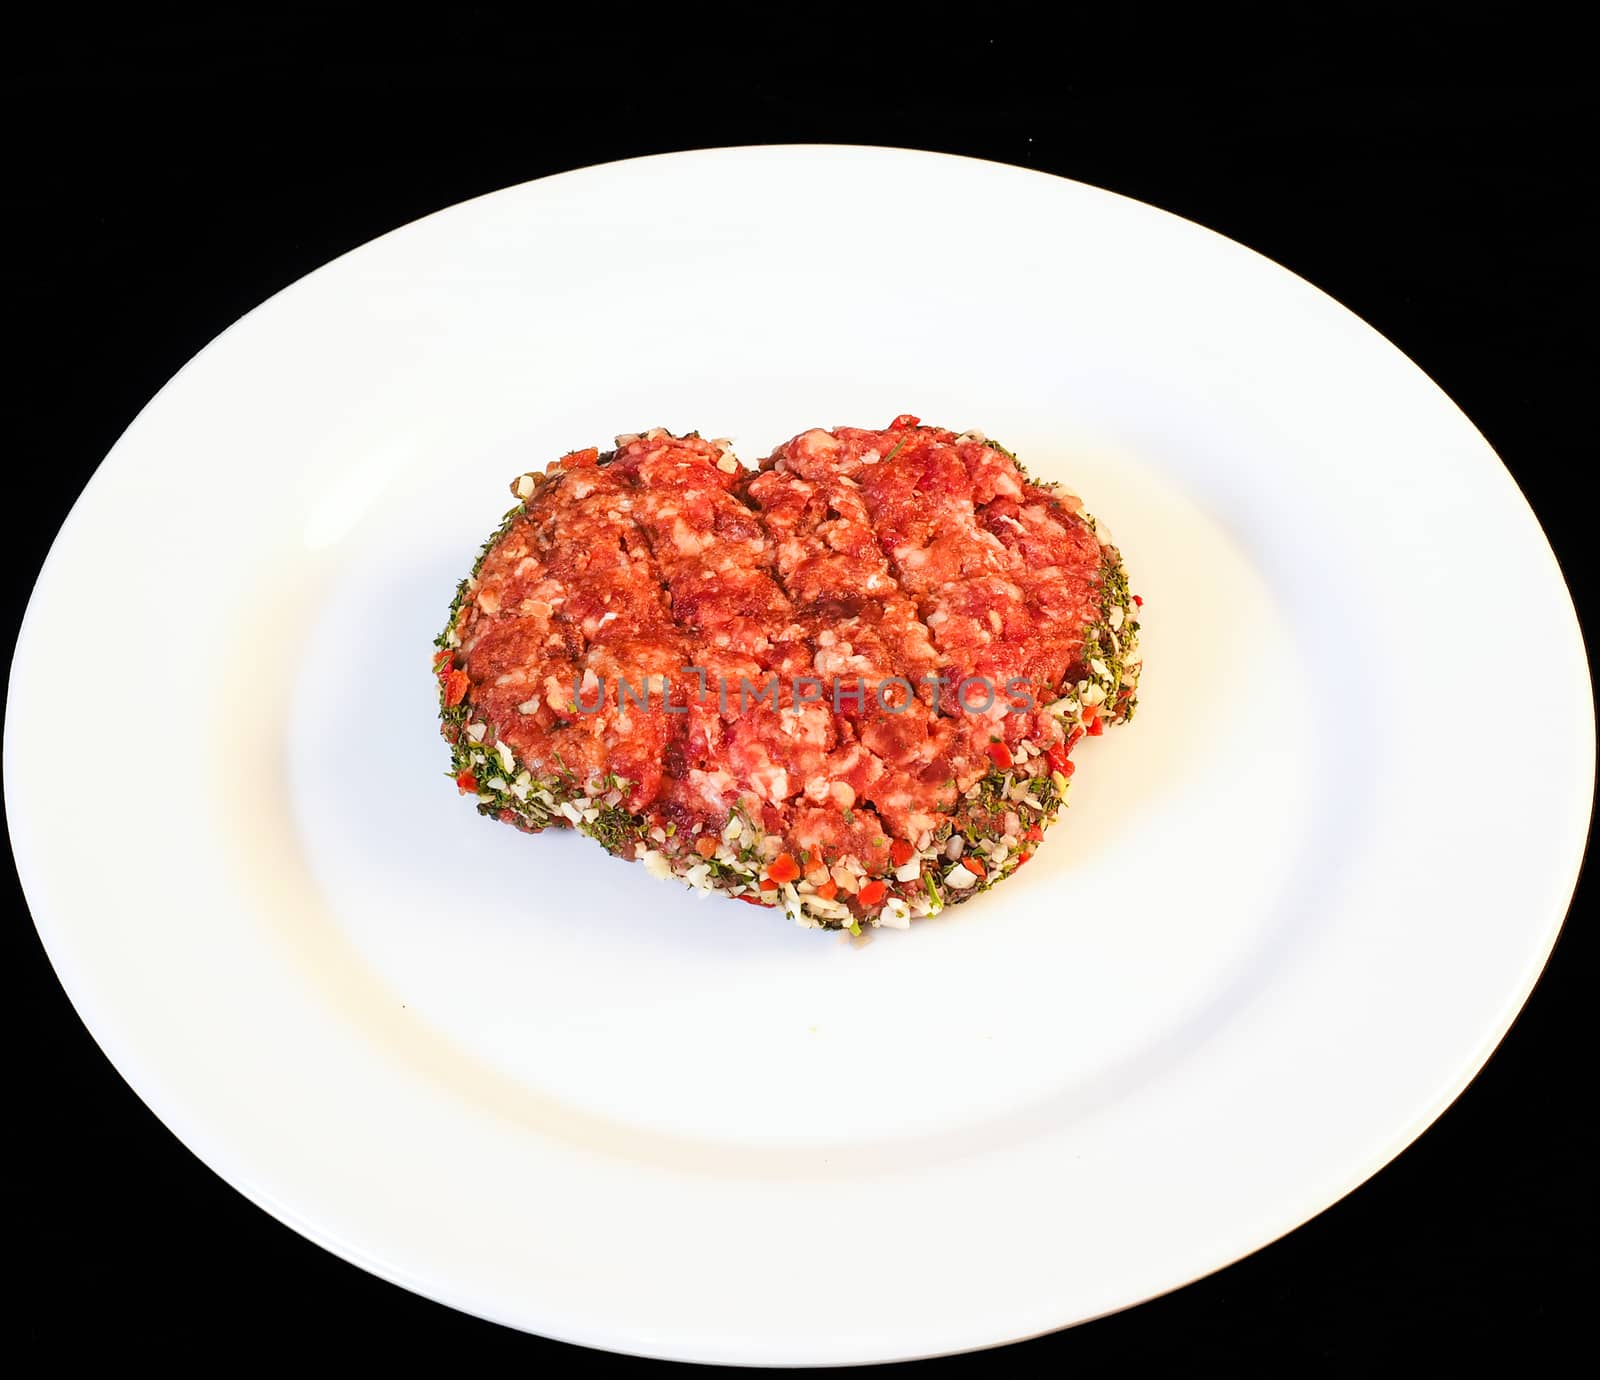 Seasoned raw red hamburger on white plate isolated on black by Arvebettum